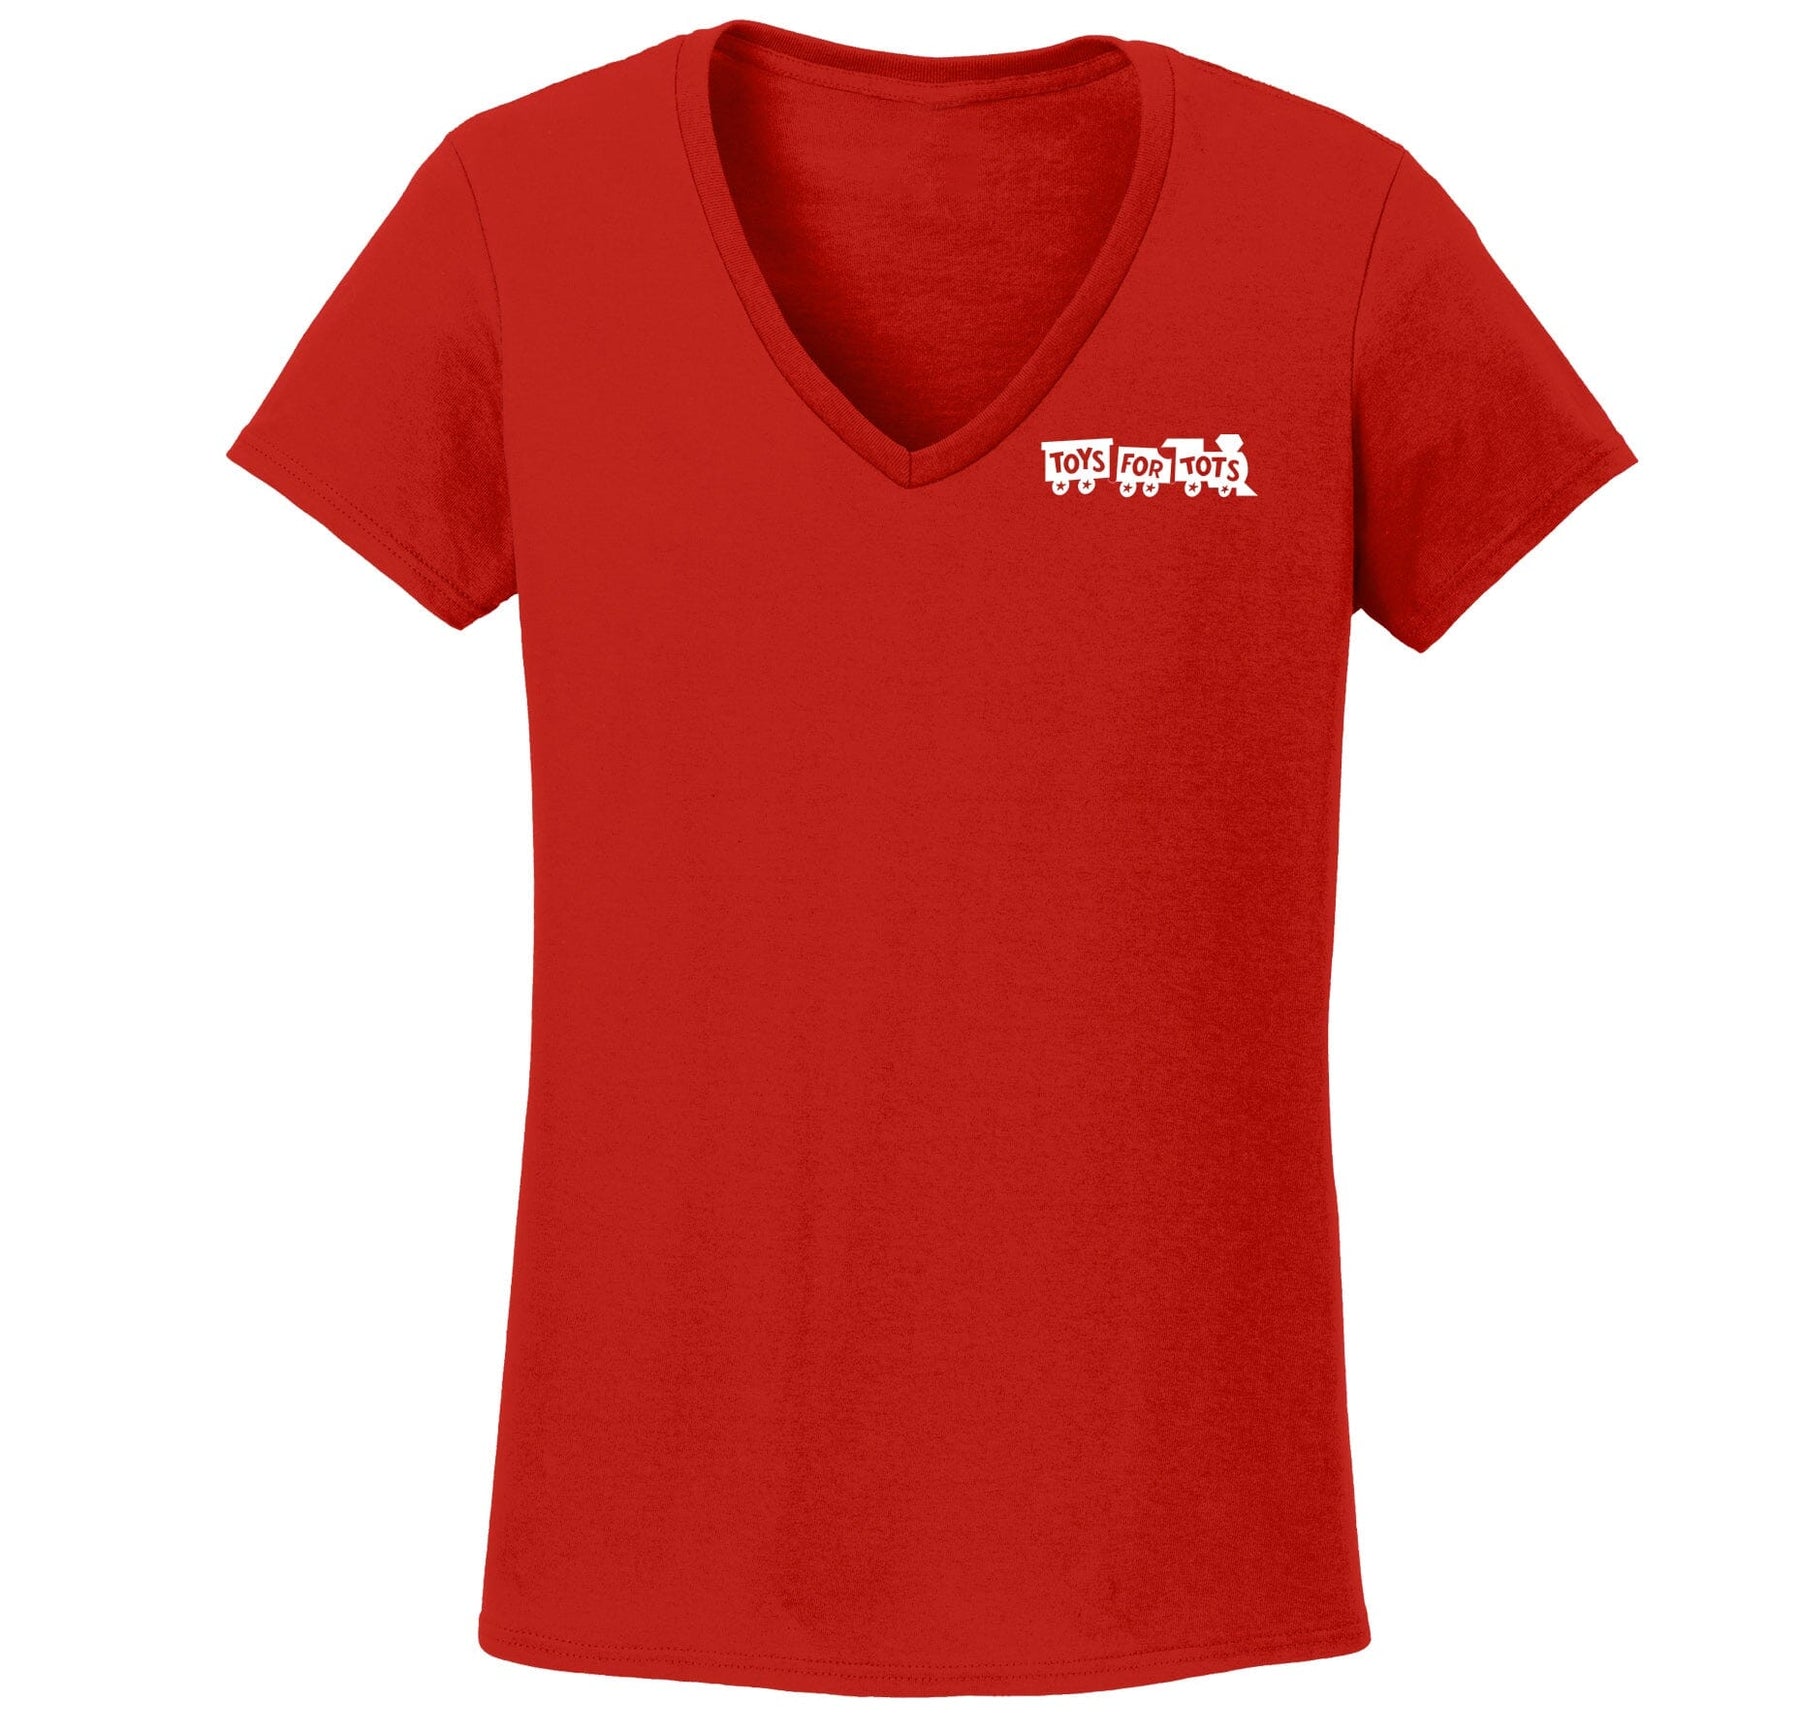 White/Black TFT Chest Seal Women's V-Neck TFT Shirt marinecorpsdirecttft S RED 